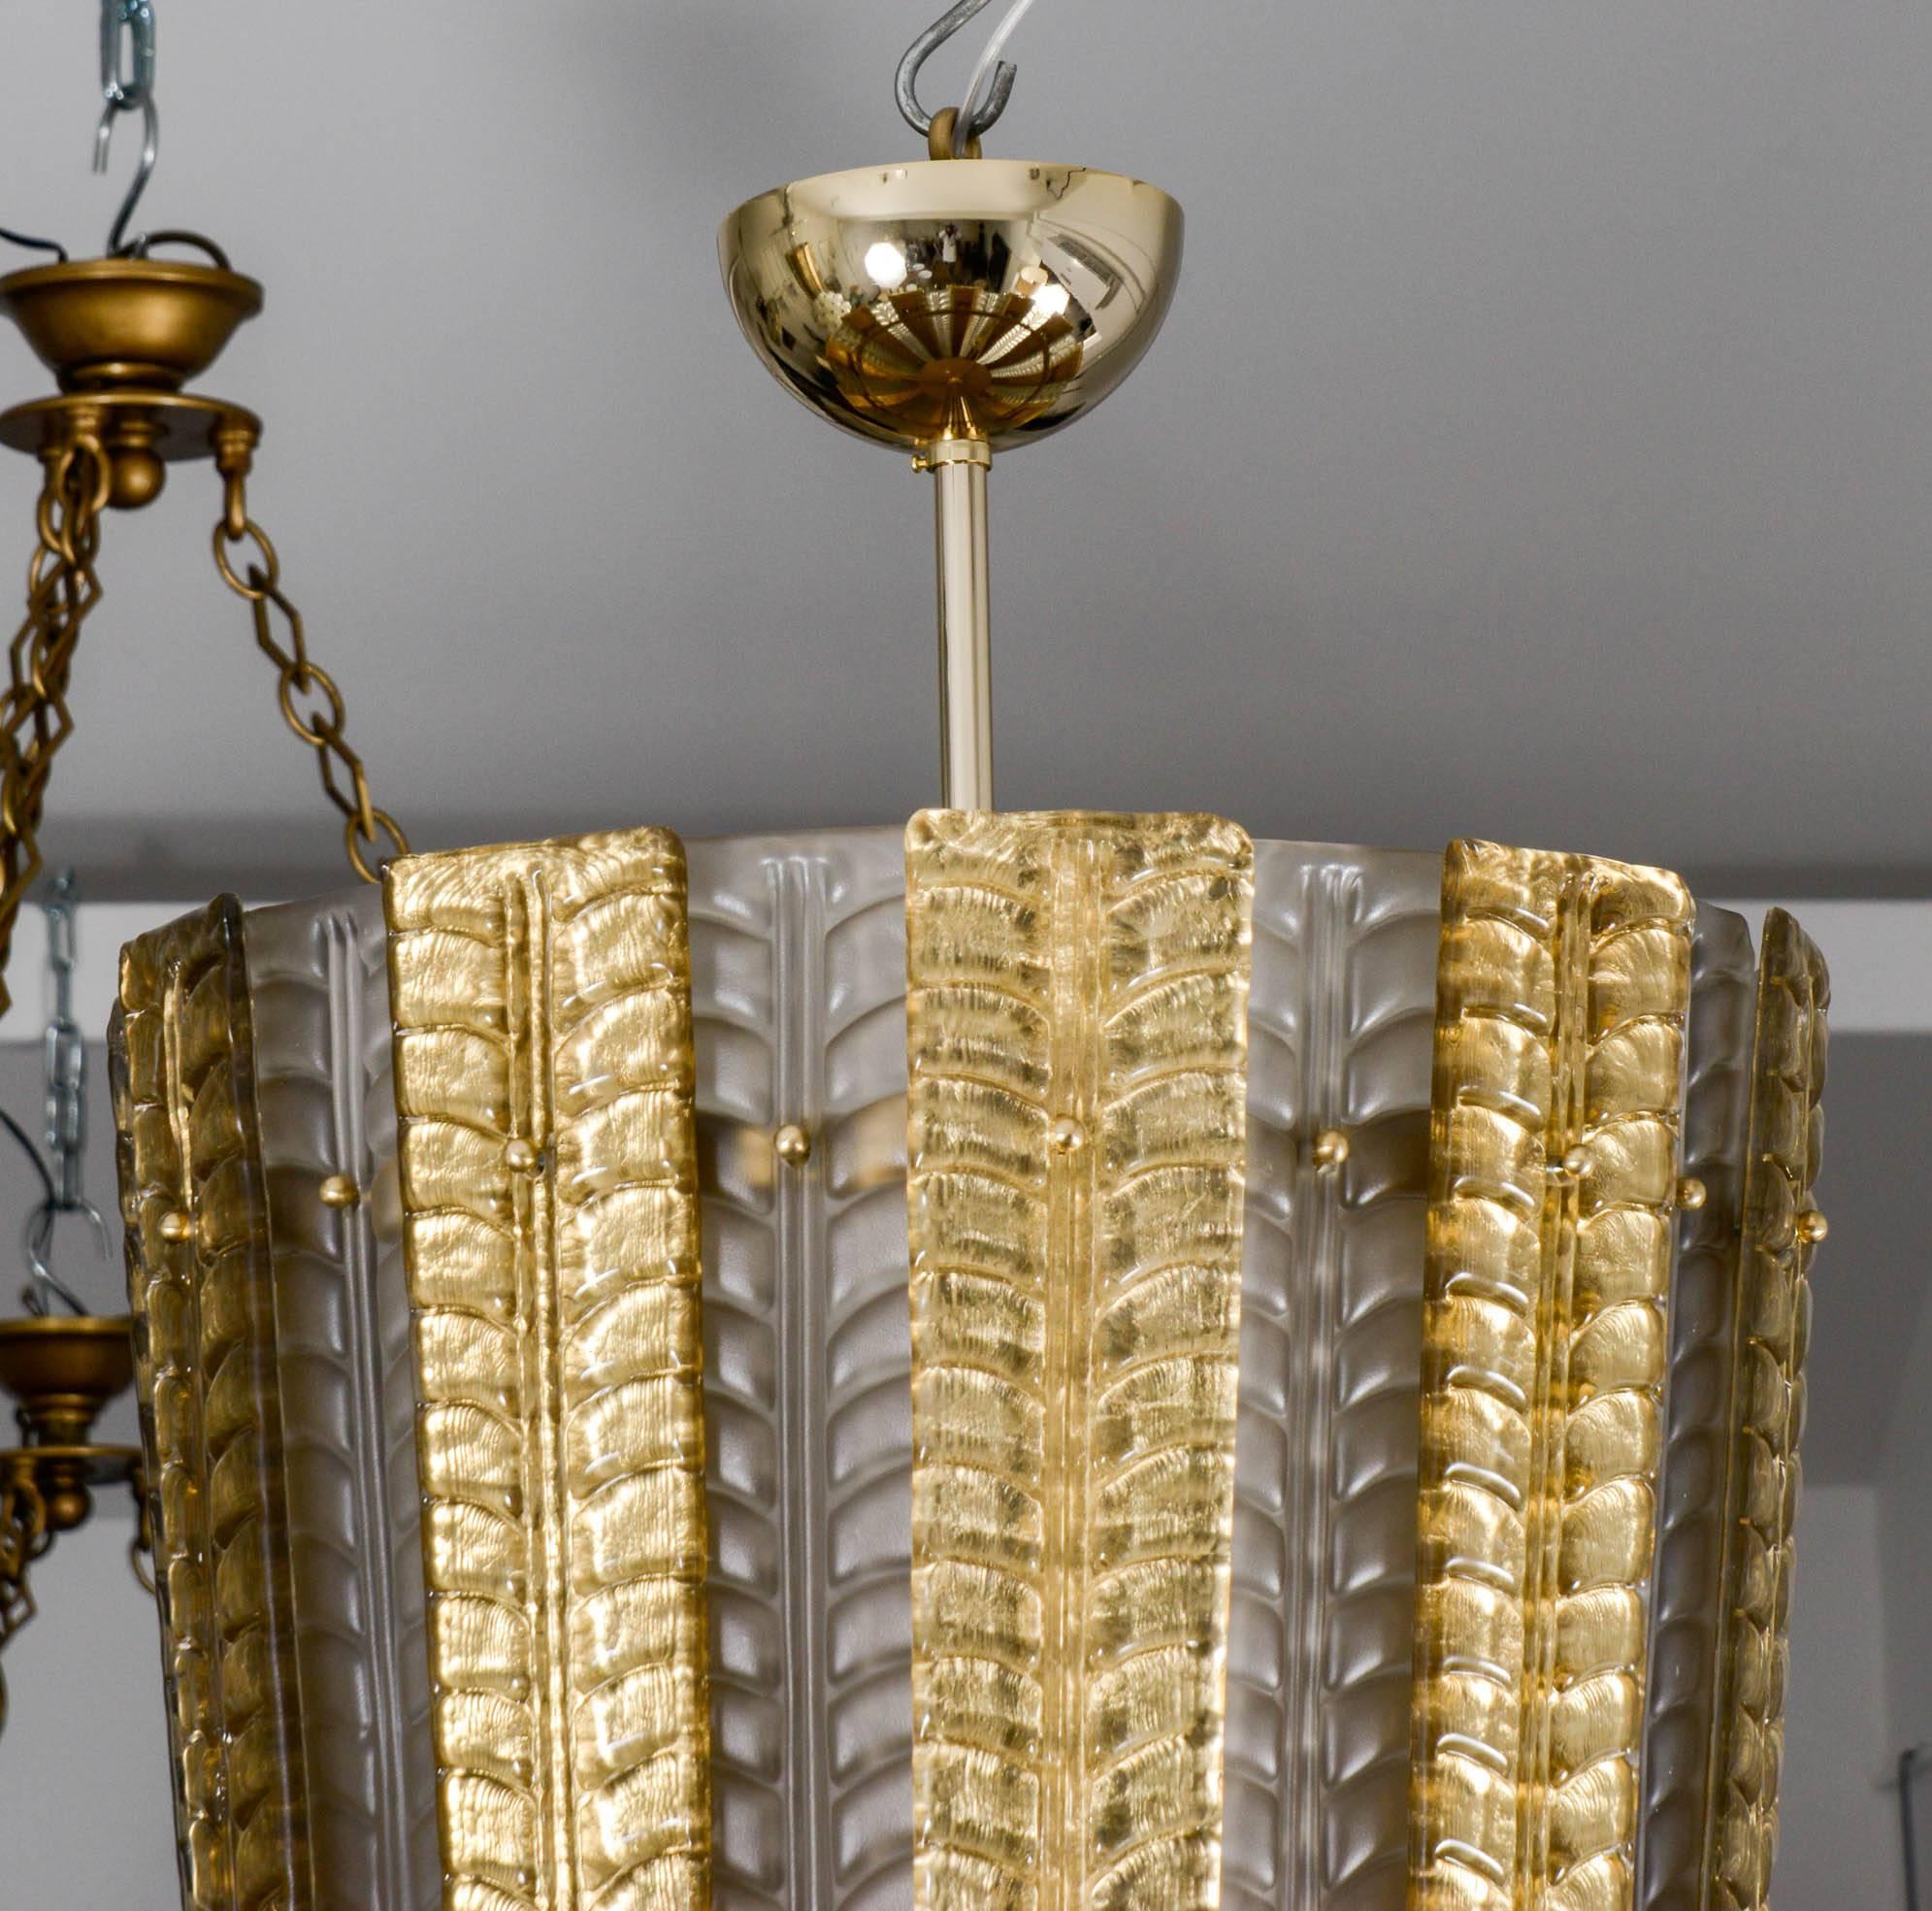 Murano glass lantern in pressed glass, gold patina.

Six bulbs.